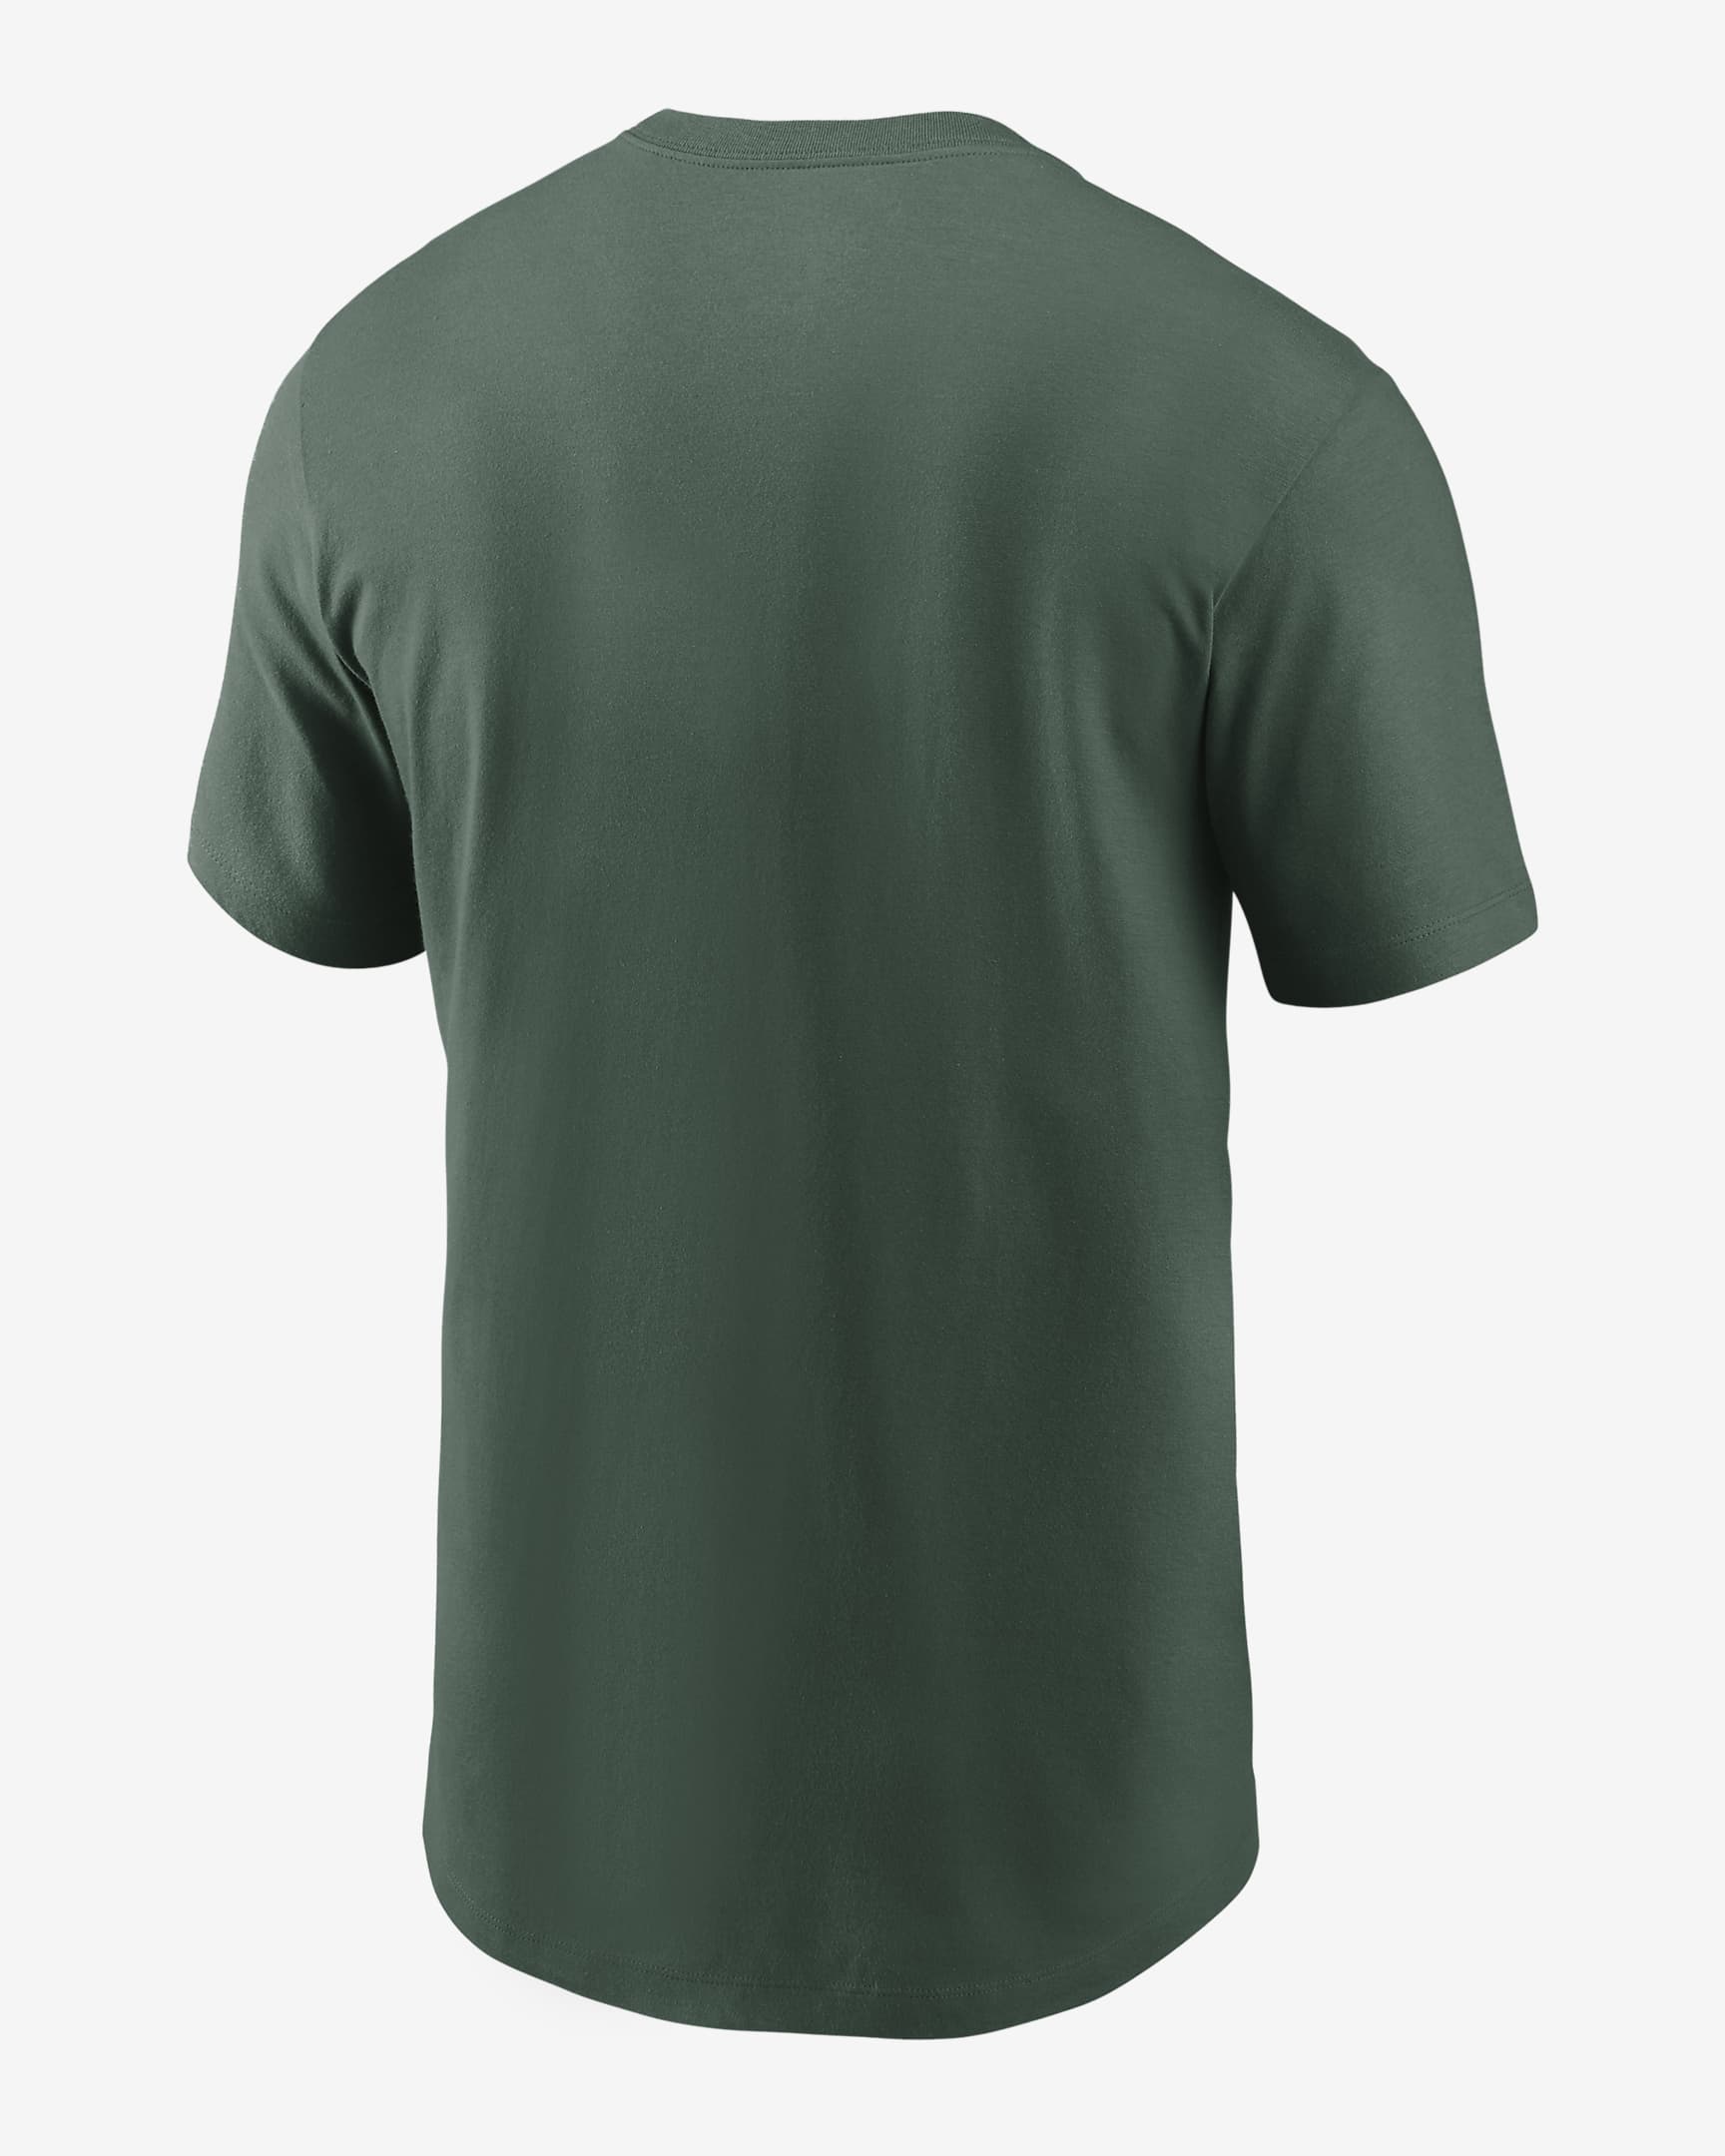 Nike Logo Essential (NFL Green Bay Packers) Men's T-Shirt. Nike LU